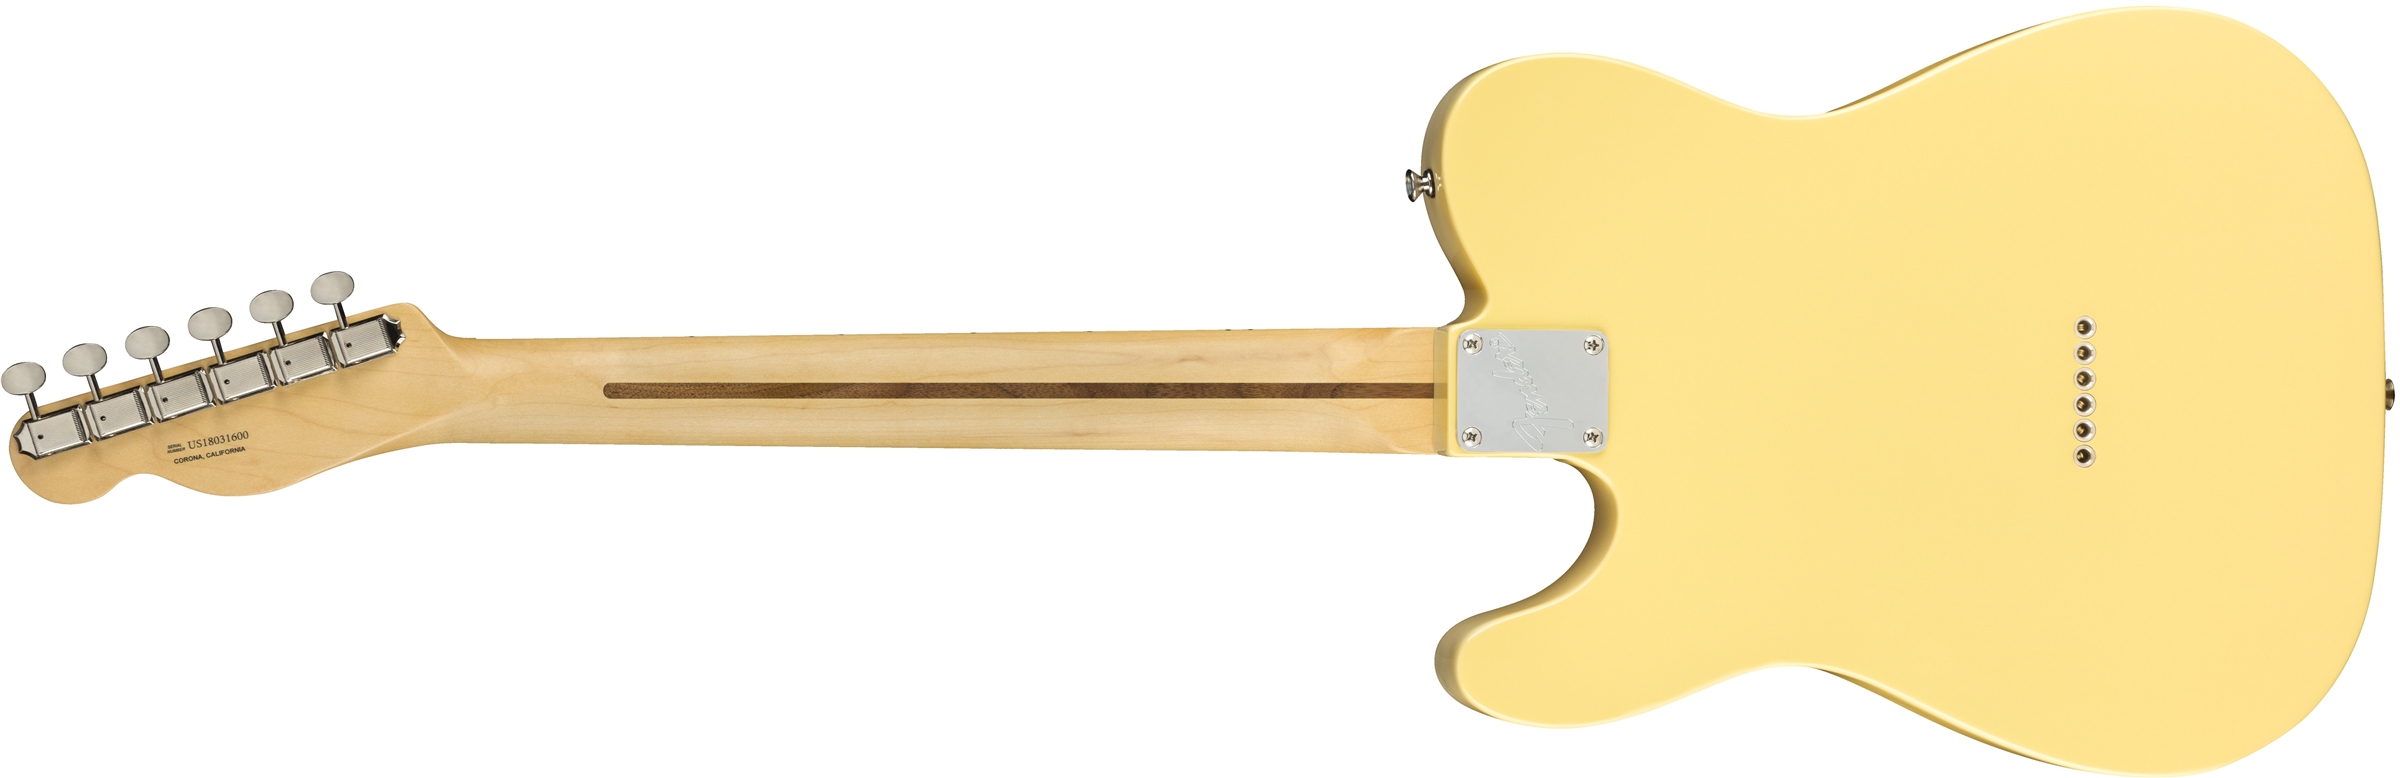 Fender Tele American Performer Usa Mn - Vintage White - Guitarra eléctrica con forma de tel - Variation 1